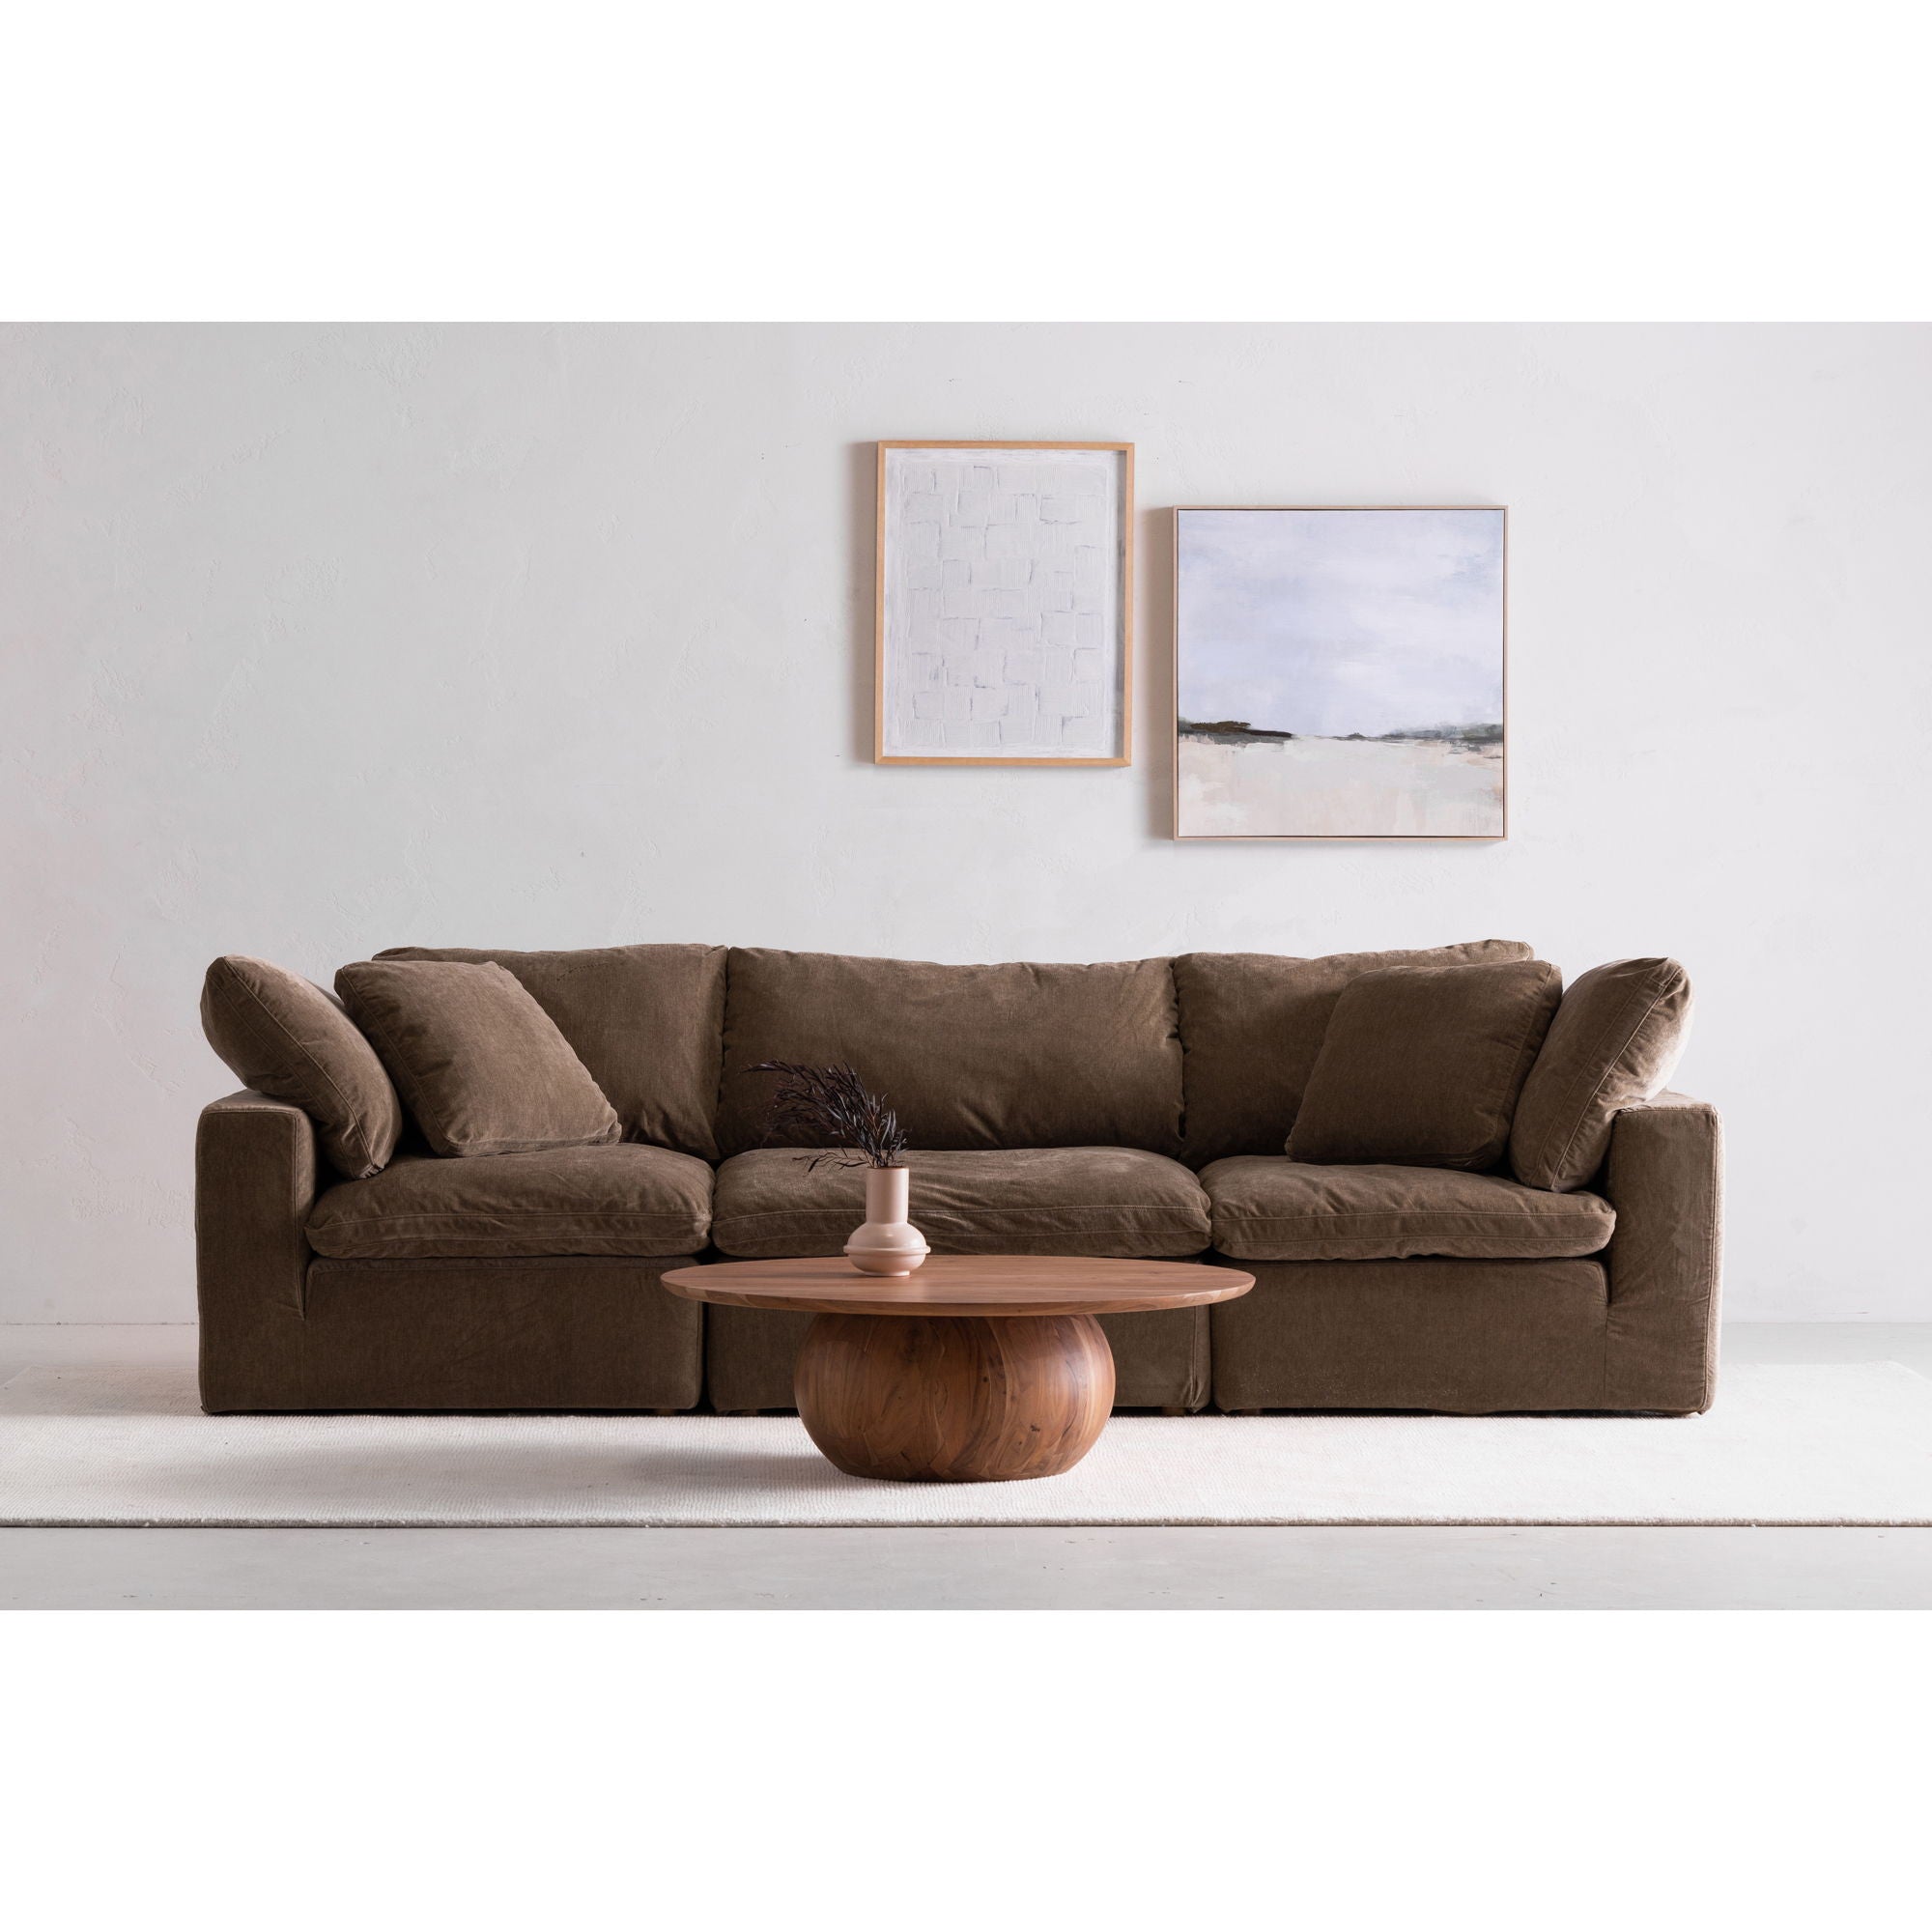 Terra - Modular Sofa Performance Fabric - Desert Sage